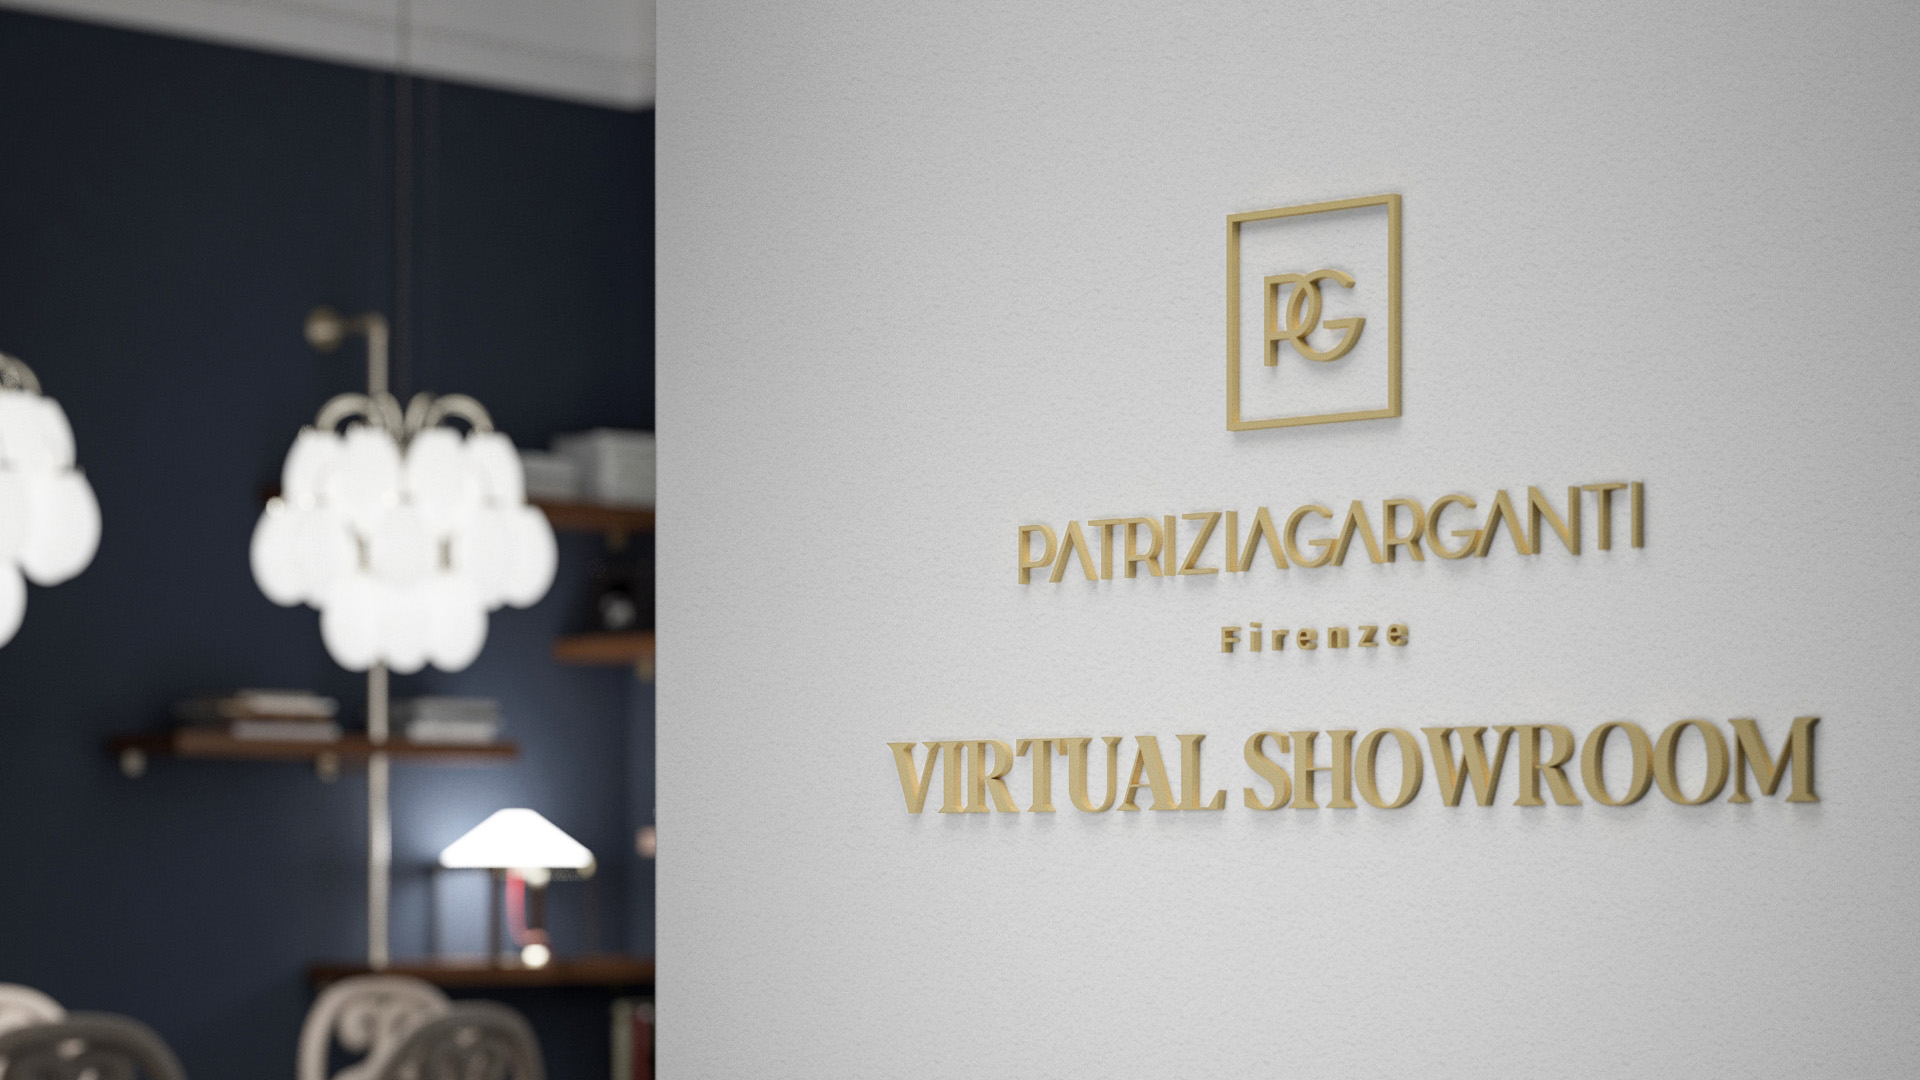 Patrizia Garganti Showroom Virtuale